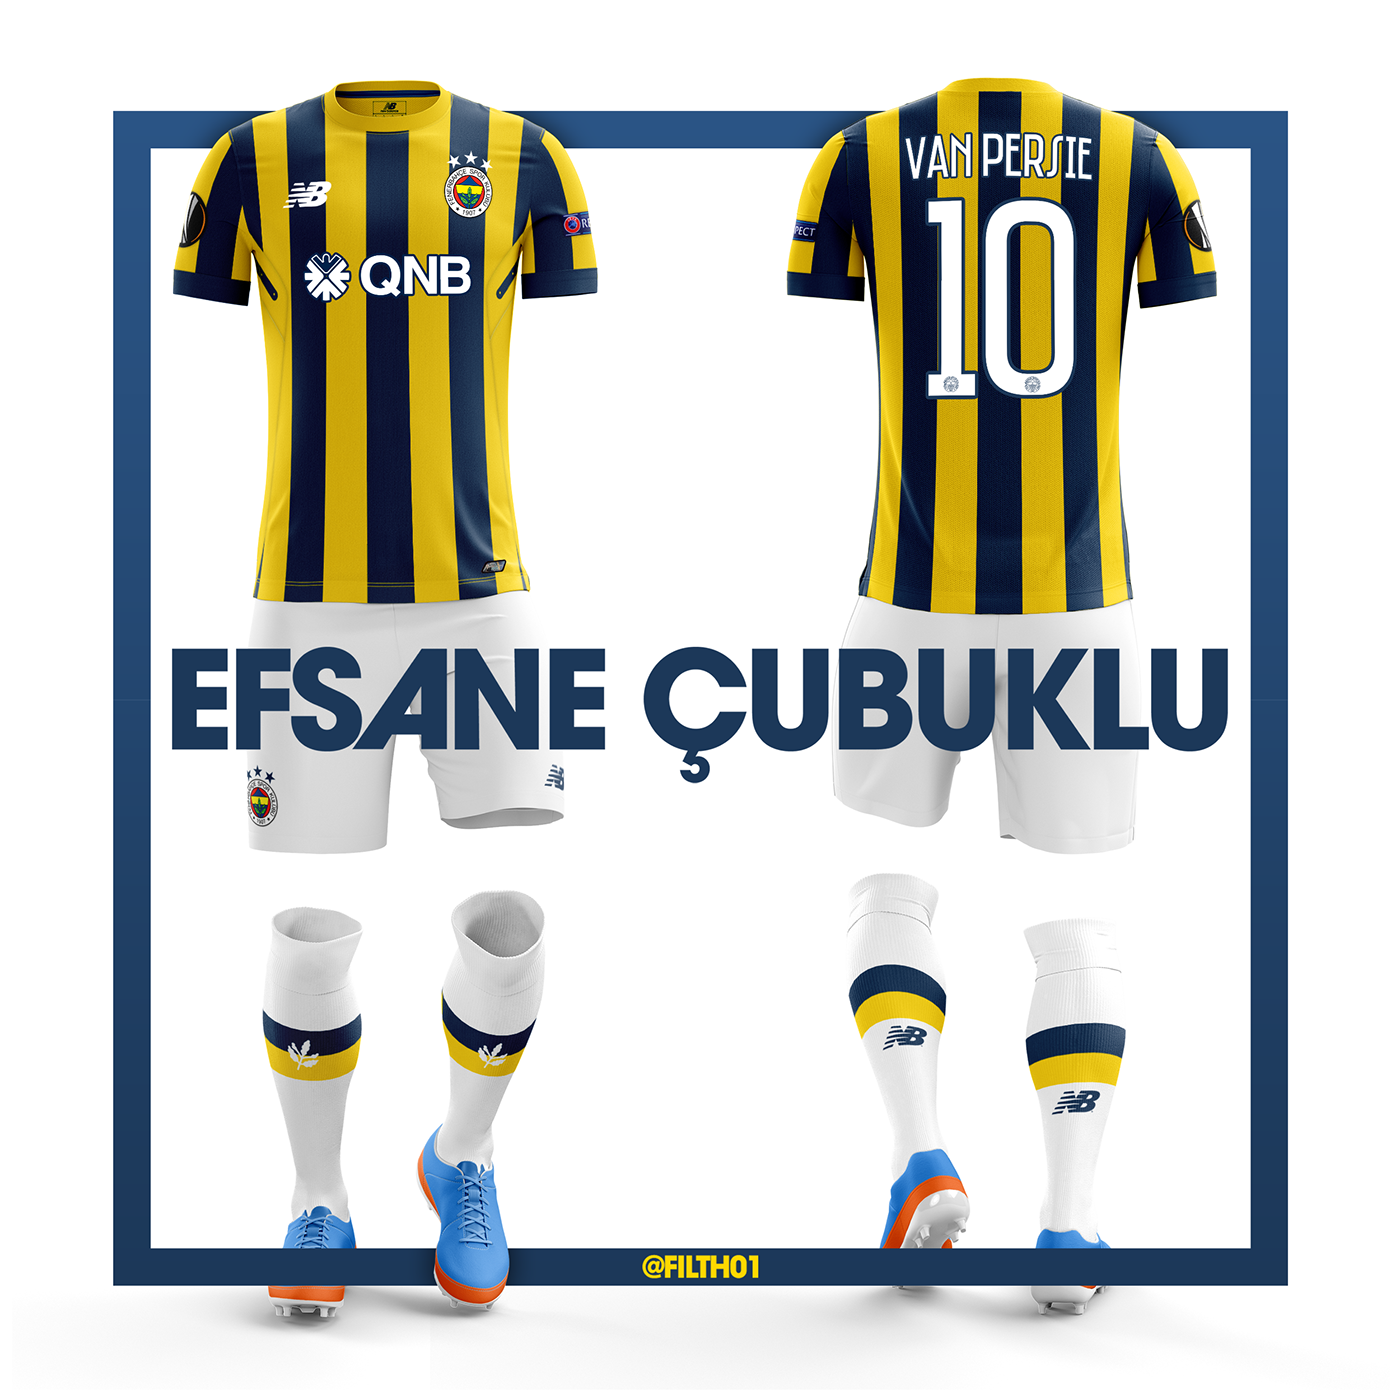 Fenerbahçe Fenerbahçe SK fener New Balance new balance football nb football football jersey kit soccer